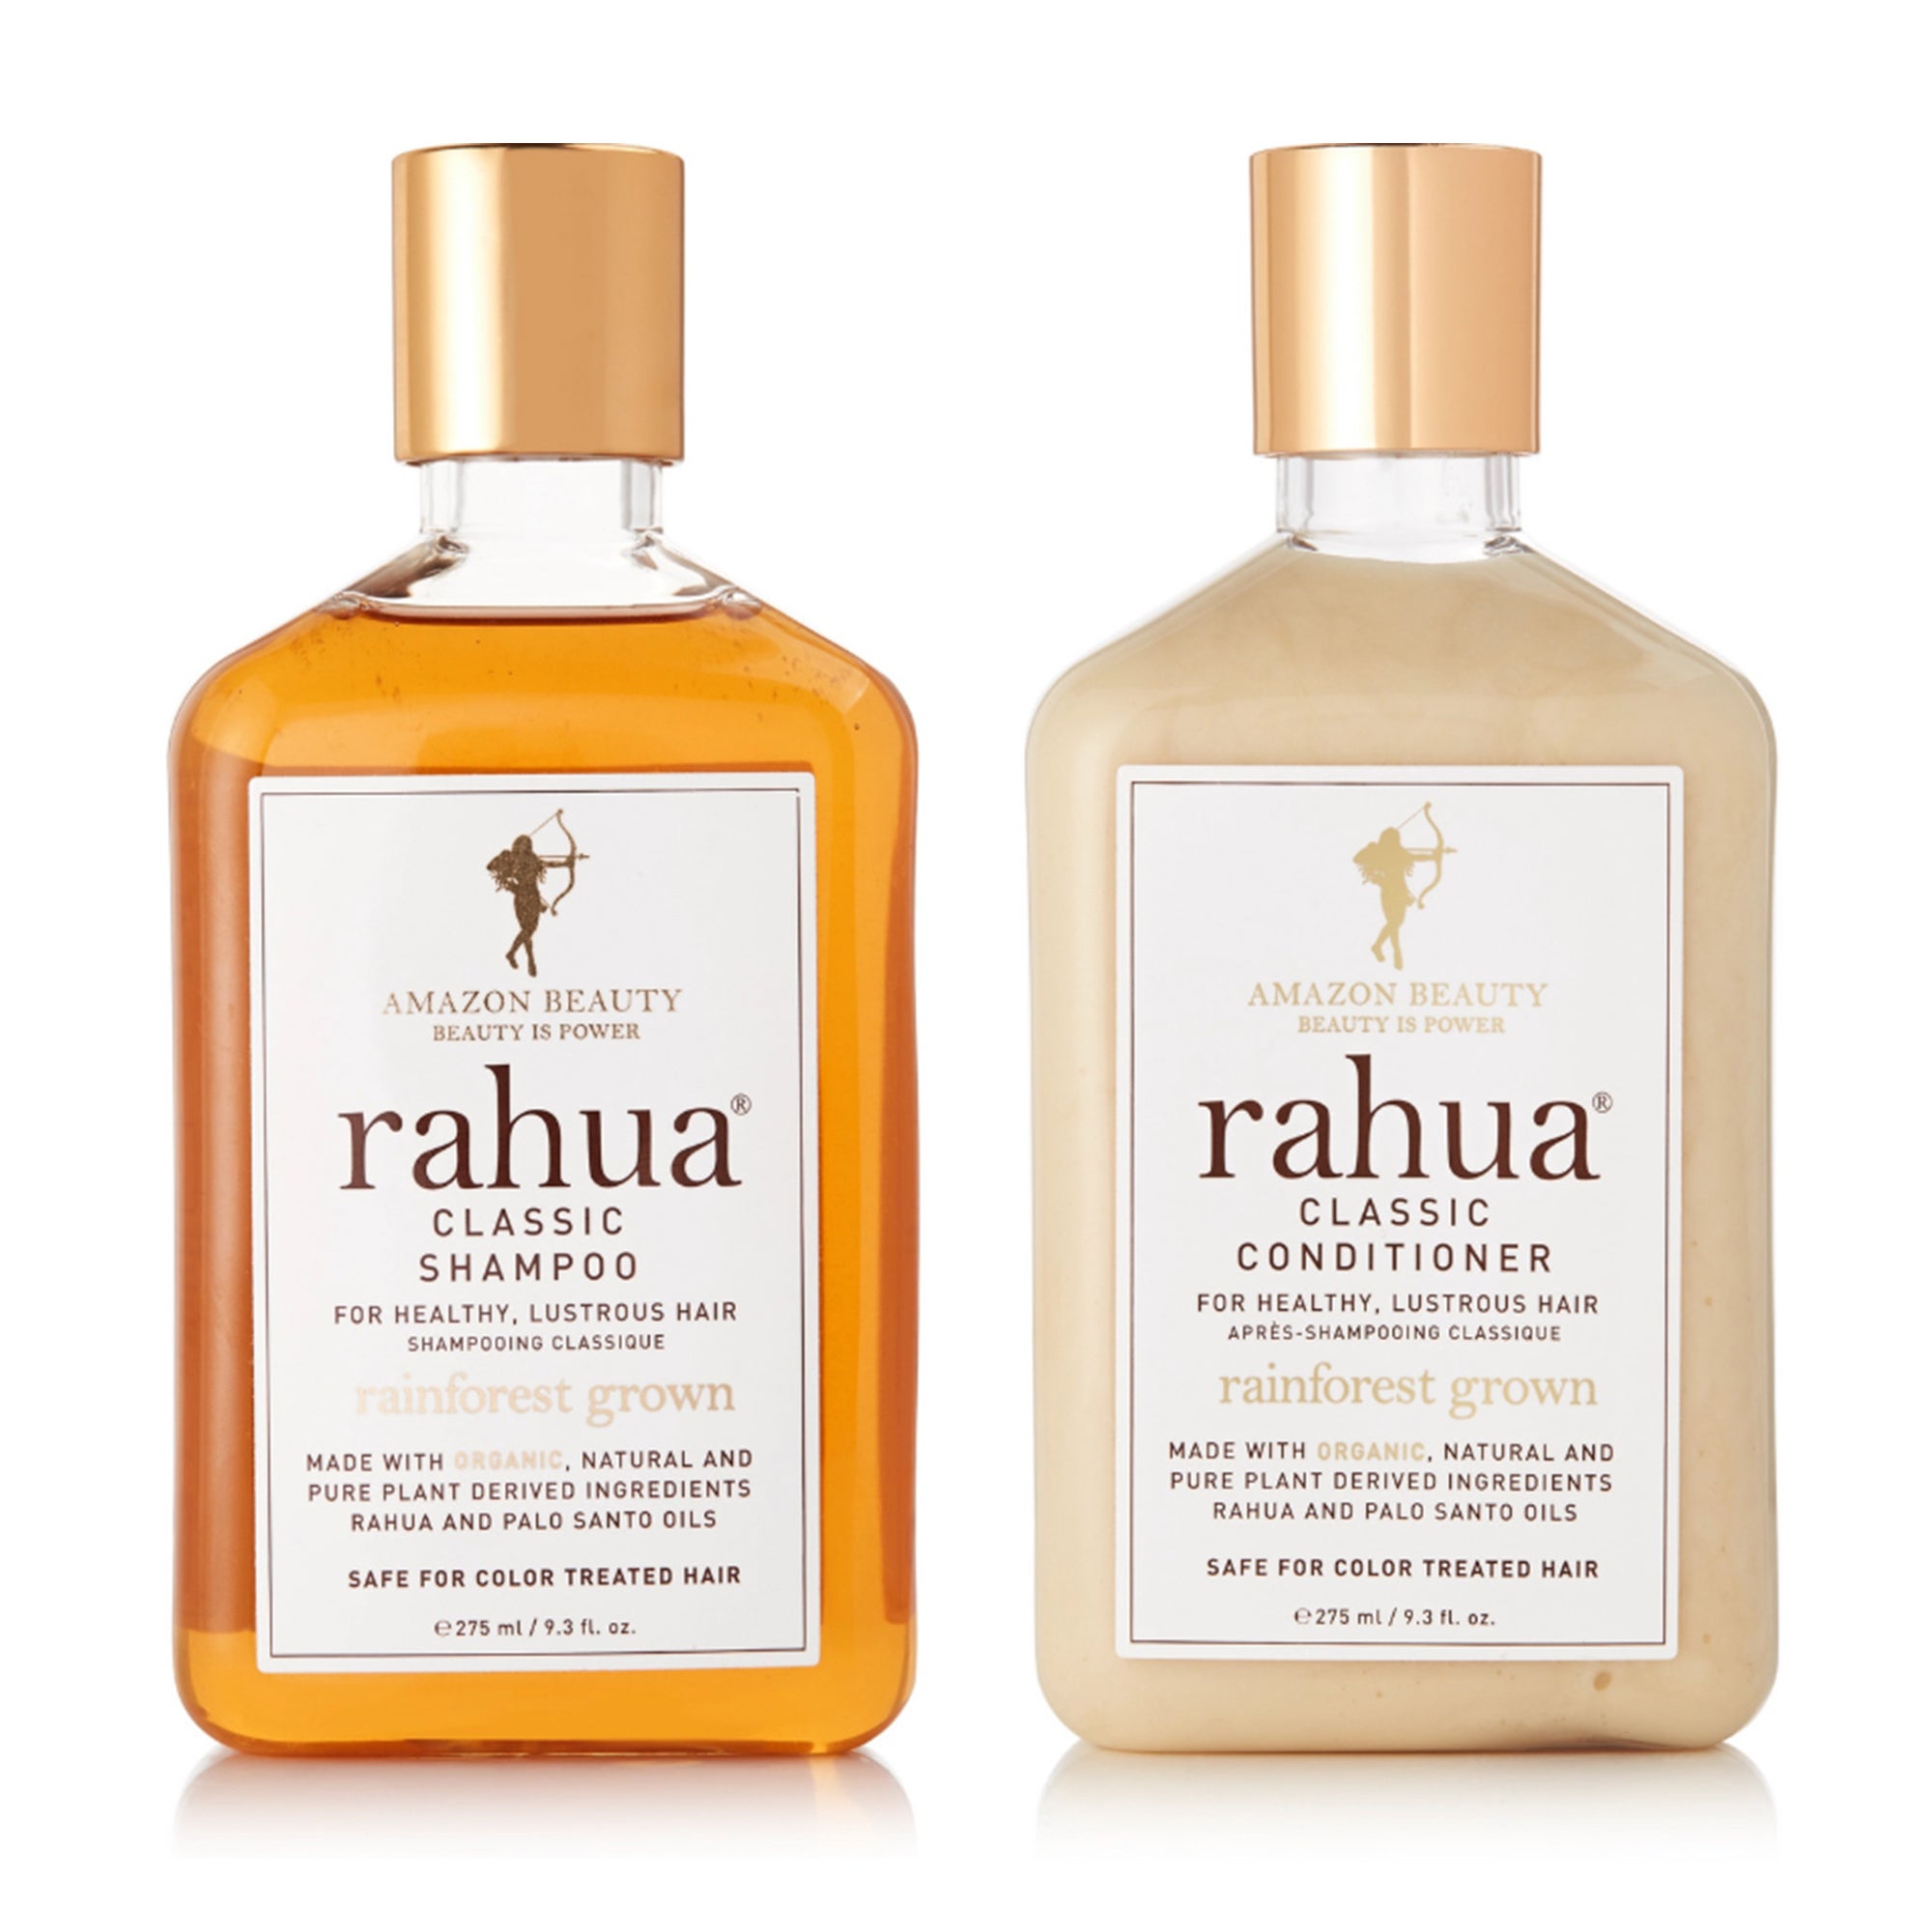 Rahua classic shampoo and conditioner